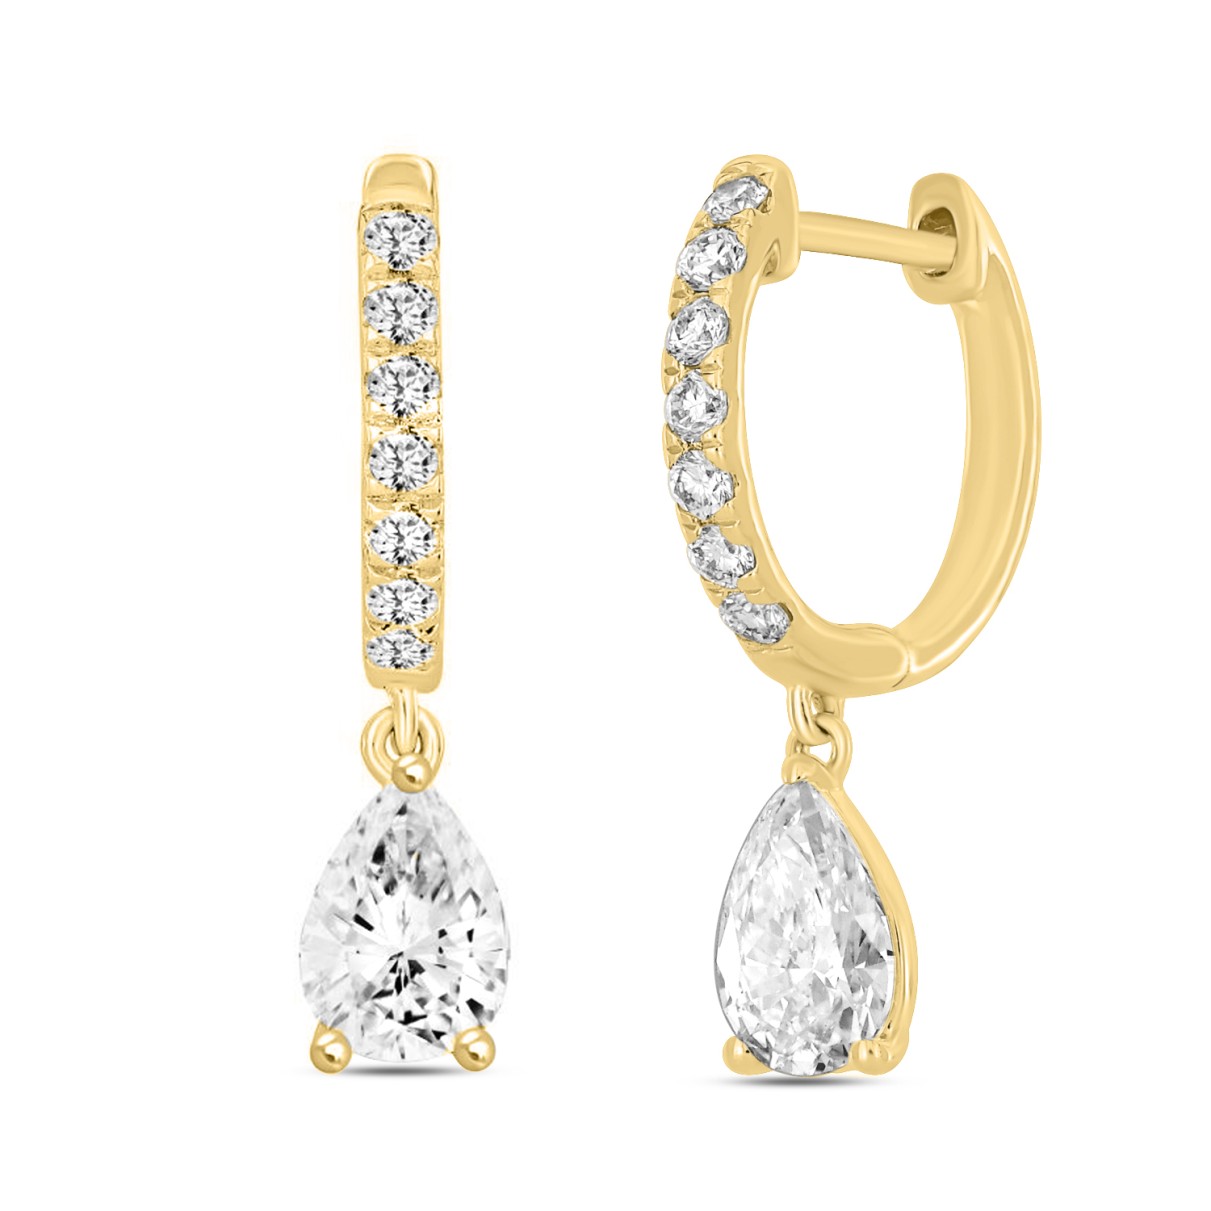 LADIES EARRINGS  1 1/4CT PEAR/ROUND DIAMOND 14K YELLOW GOLD (CENTER STONE PEAR DIAMOND 1CT)